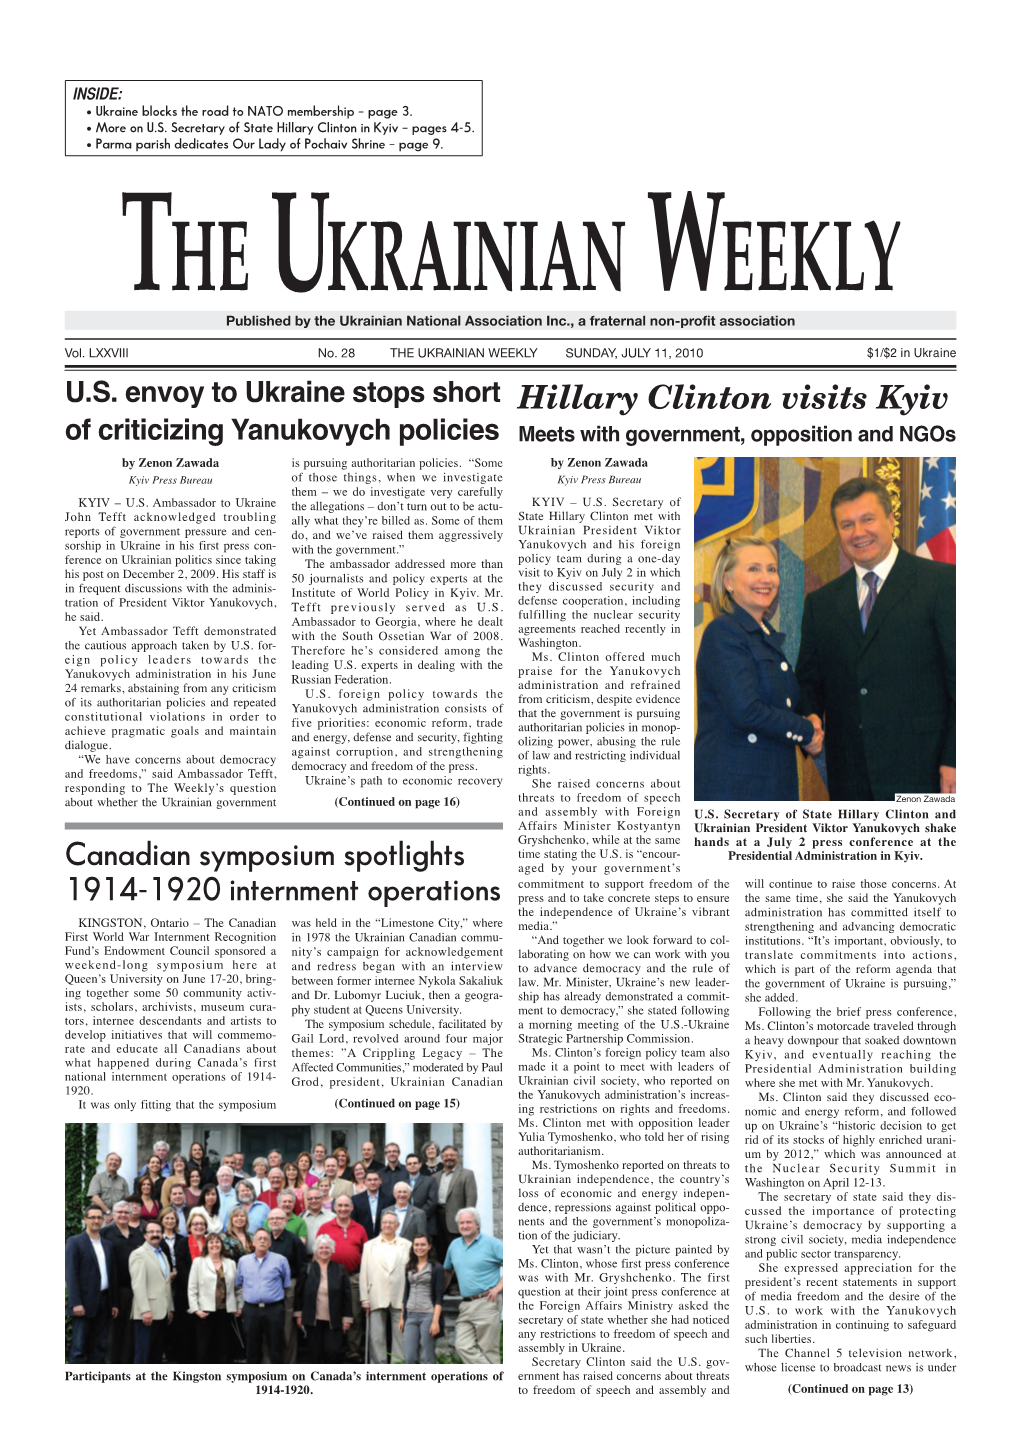 The Ukrainian Weekly 2010, No.28